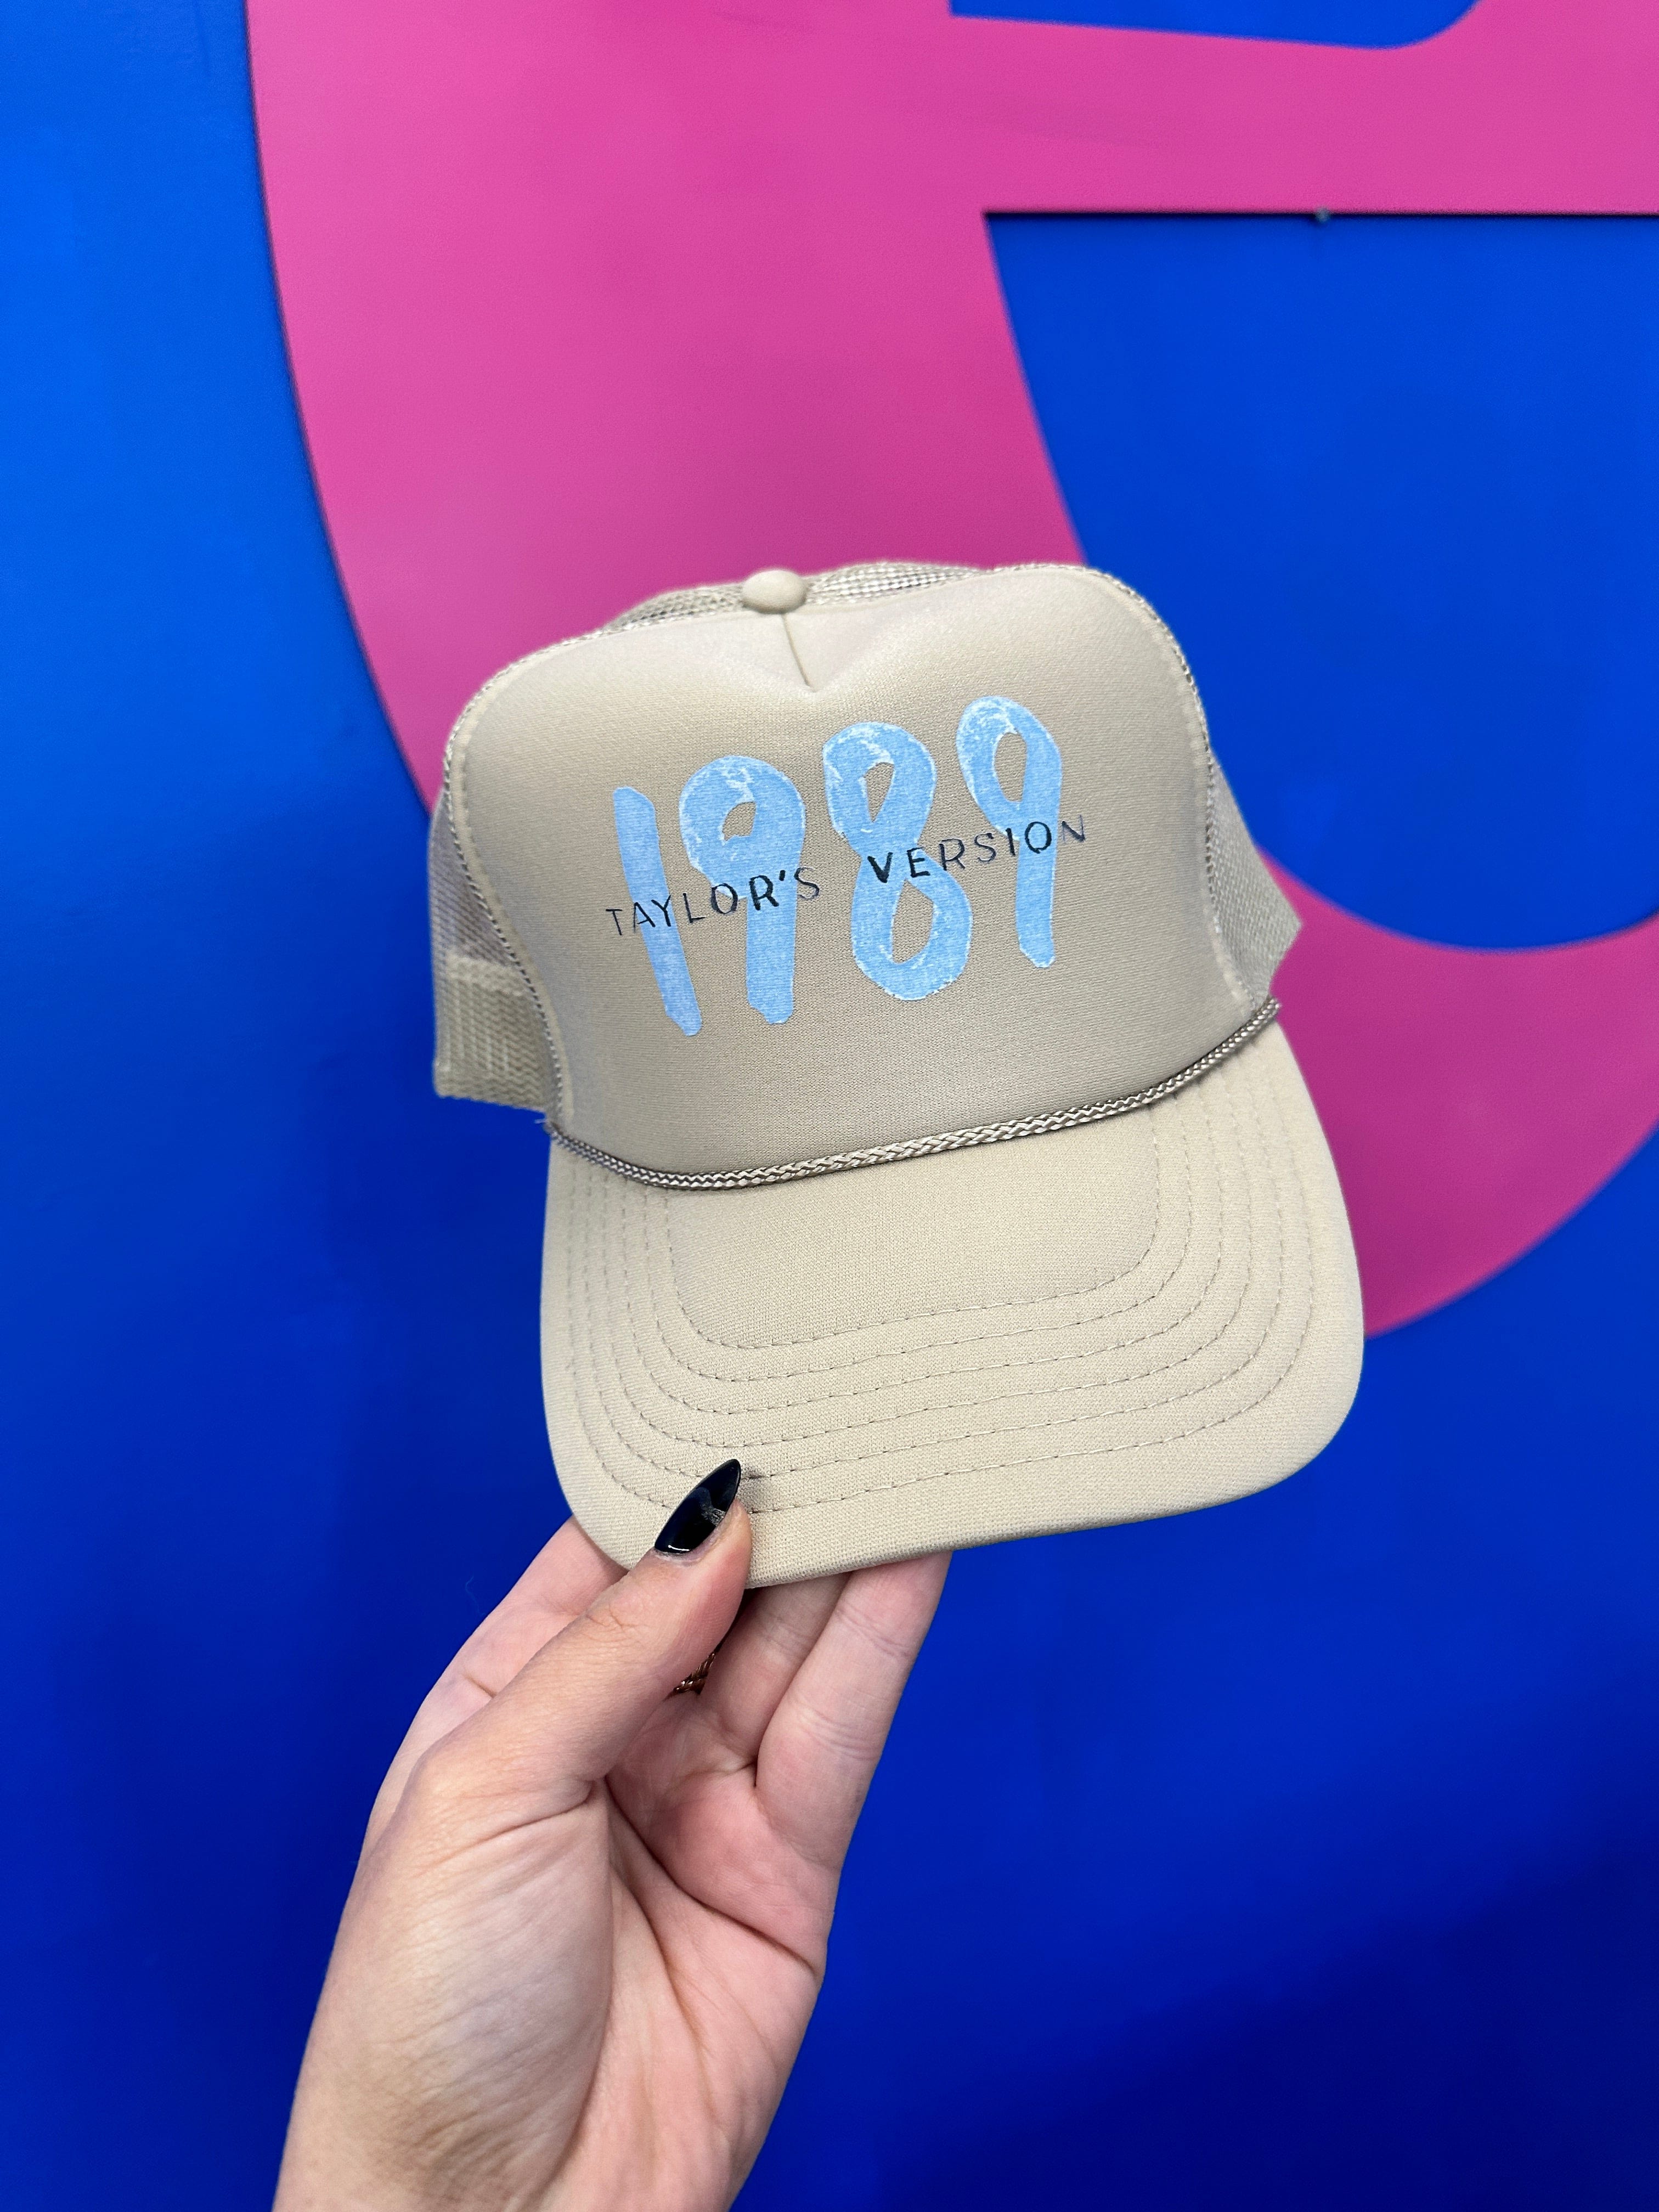 1989 Taylor’s Version Trucker Hat